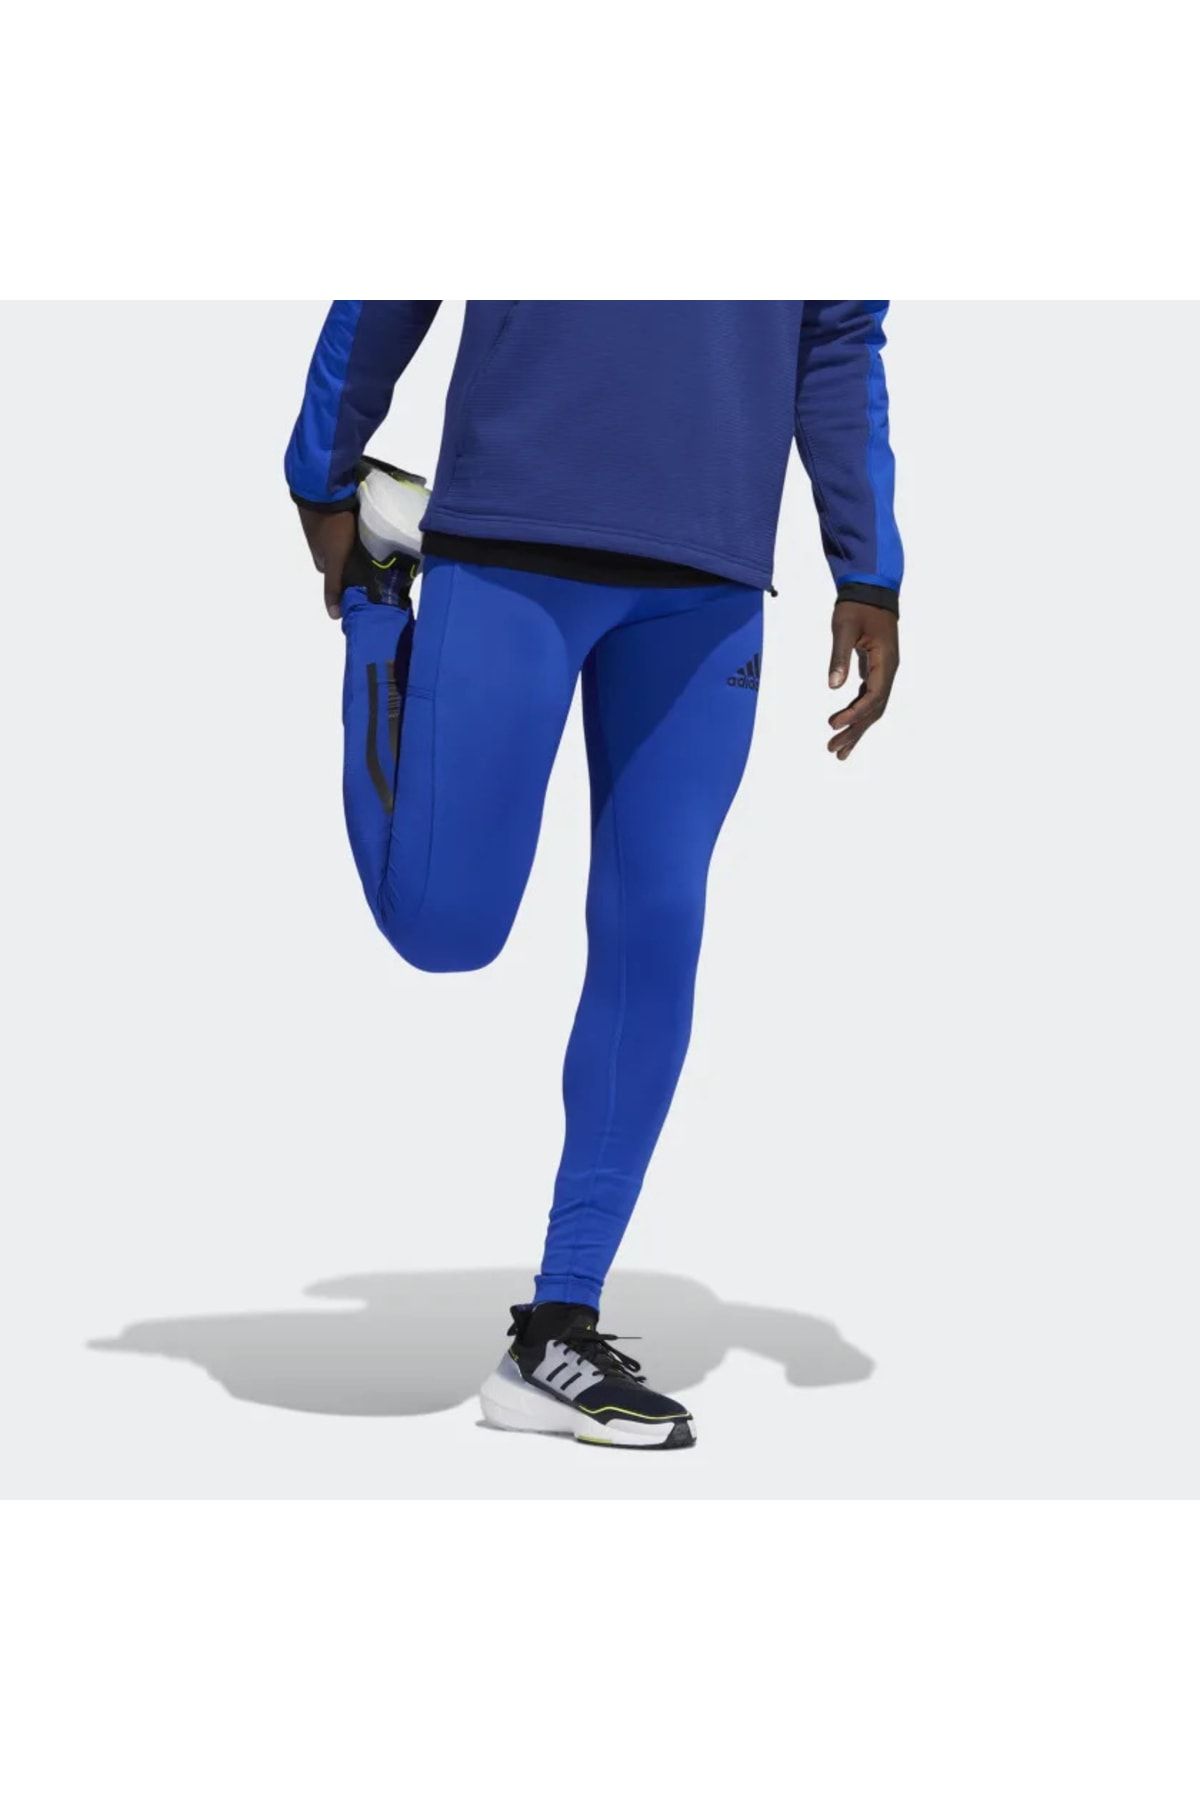 adidas Cold.rdy Techfit Long Men's Blue Sports Tights Gu6376